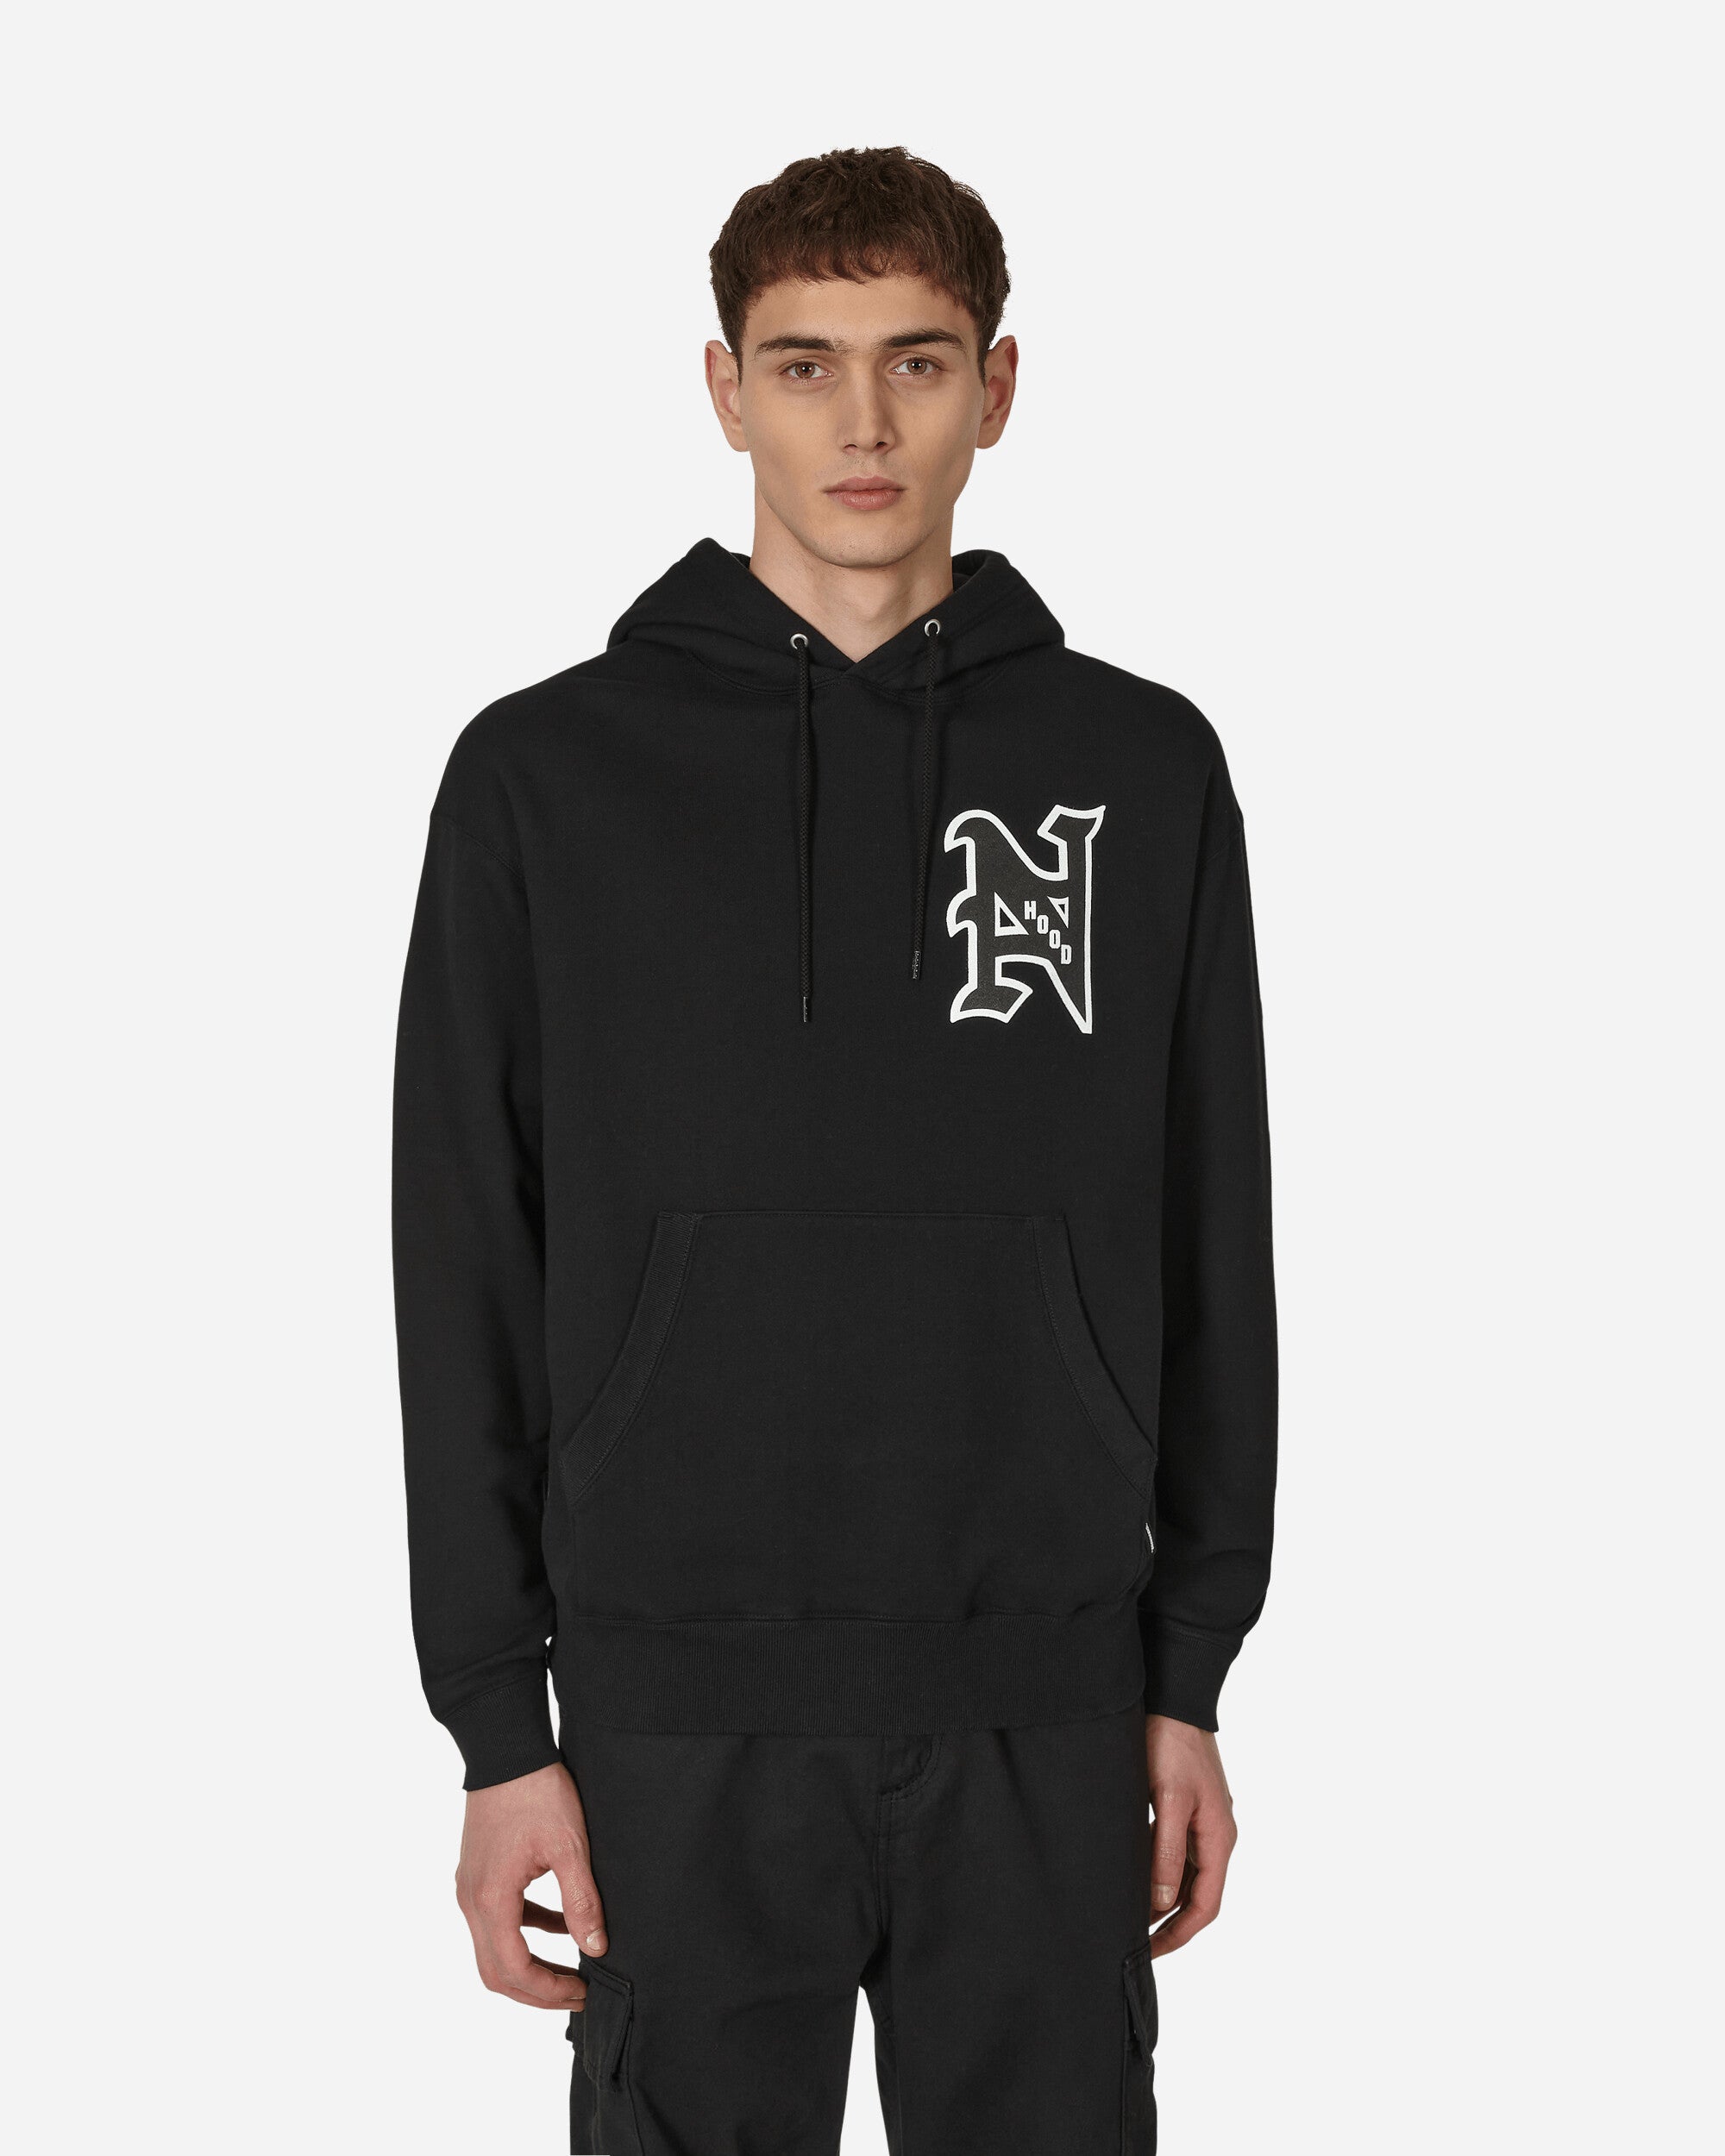 Neighborhood College Hooded Sweatshirt Black - Slam Jam Official Store